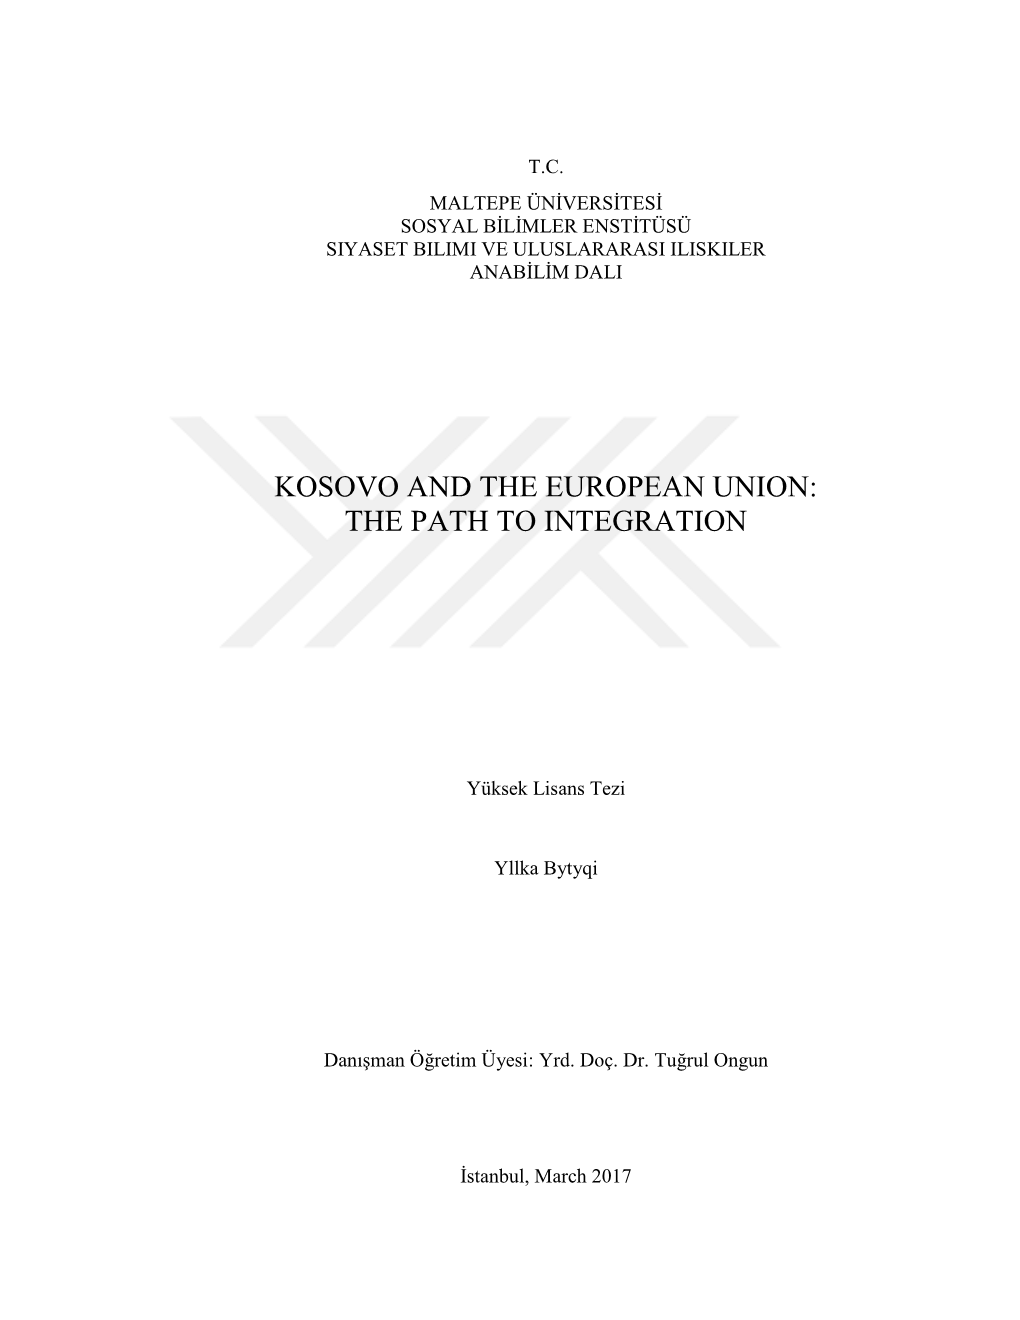 Kosovo and the European Union: the Path to Integration